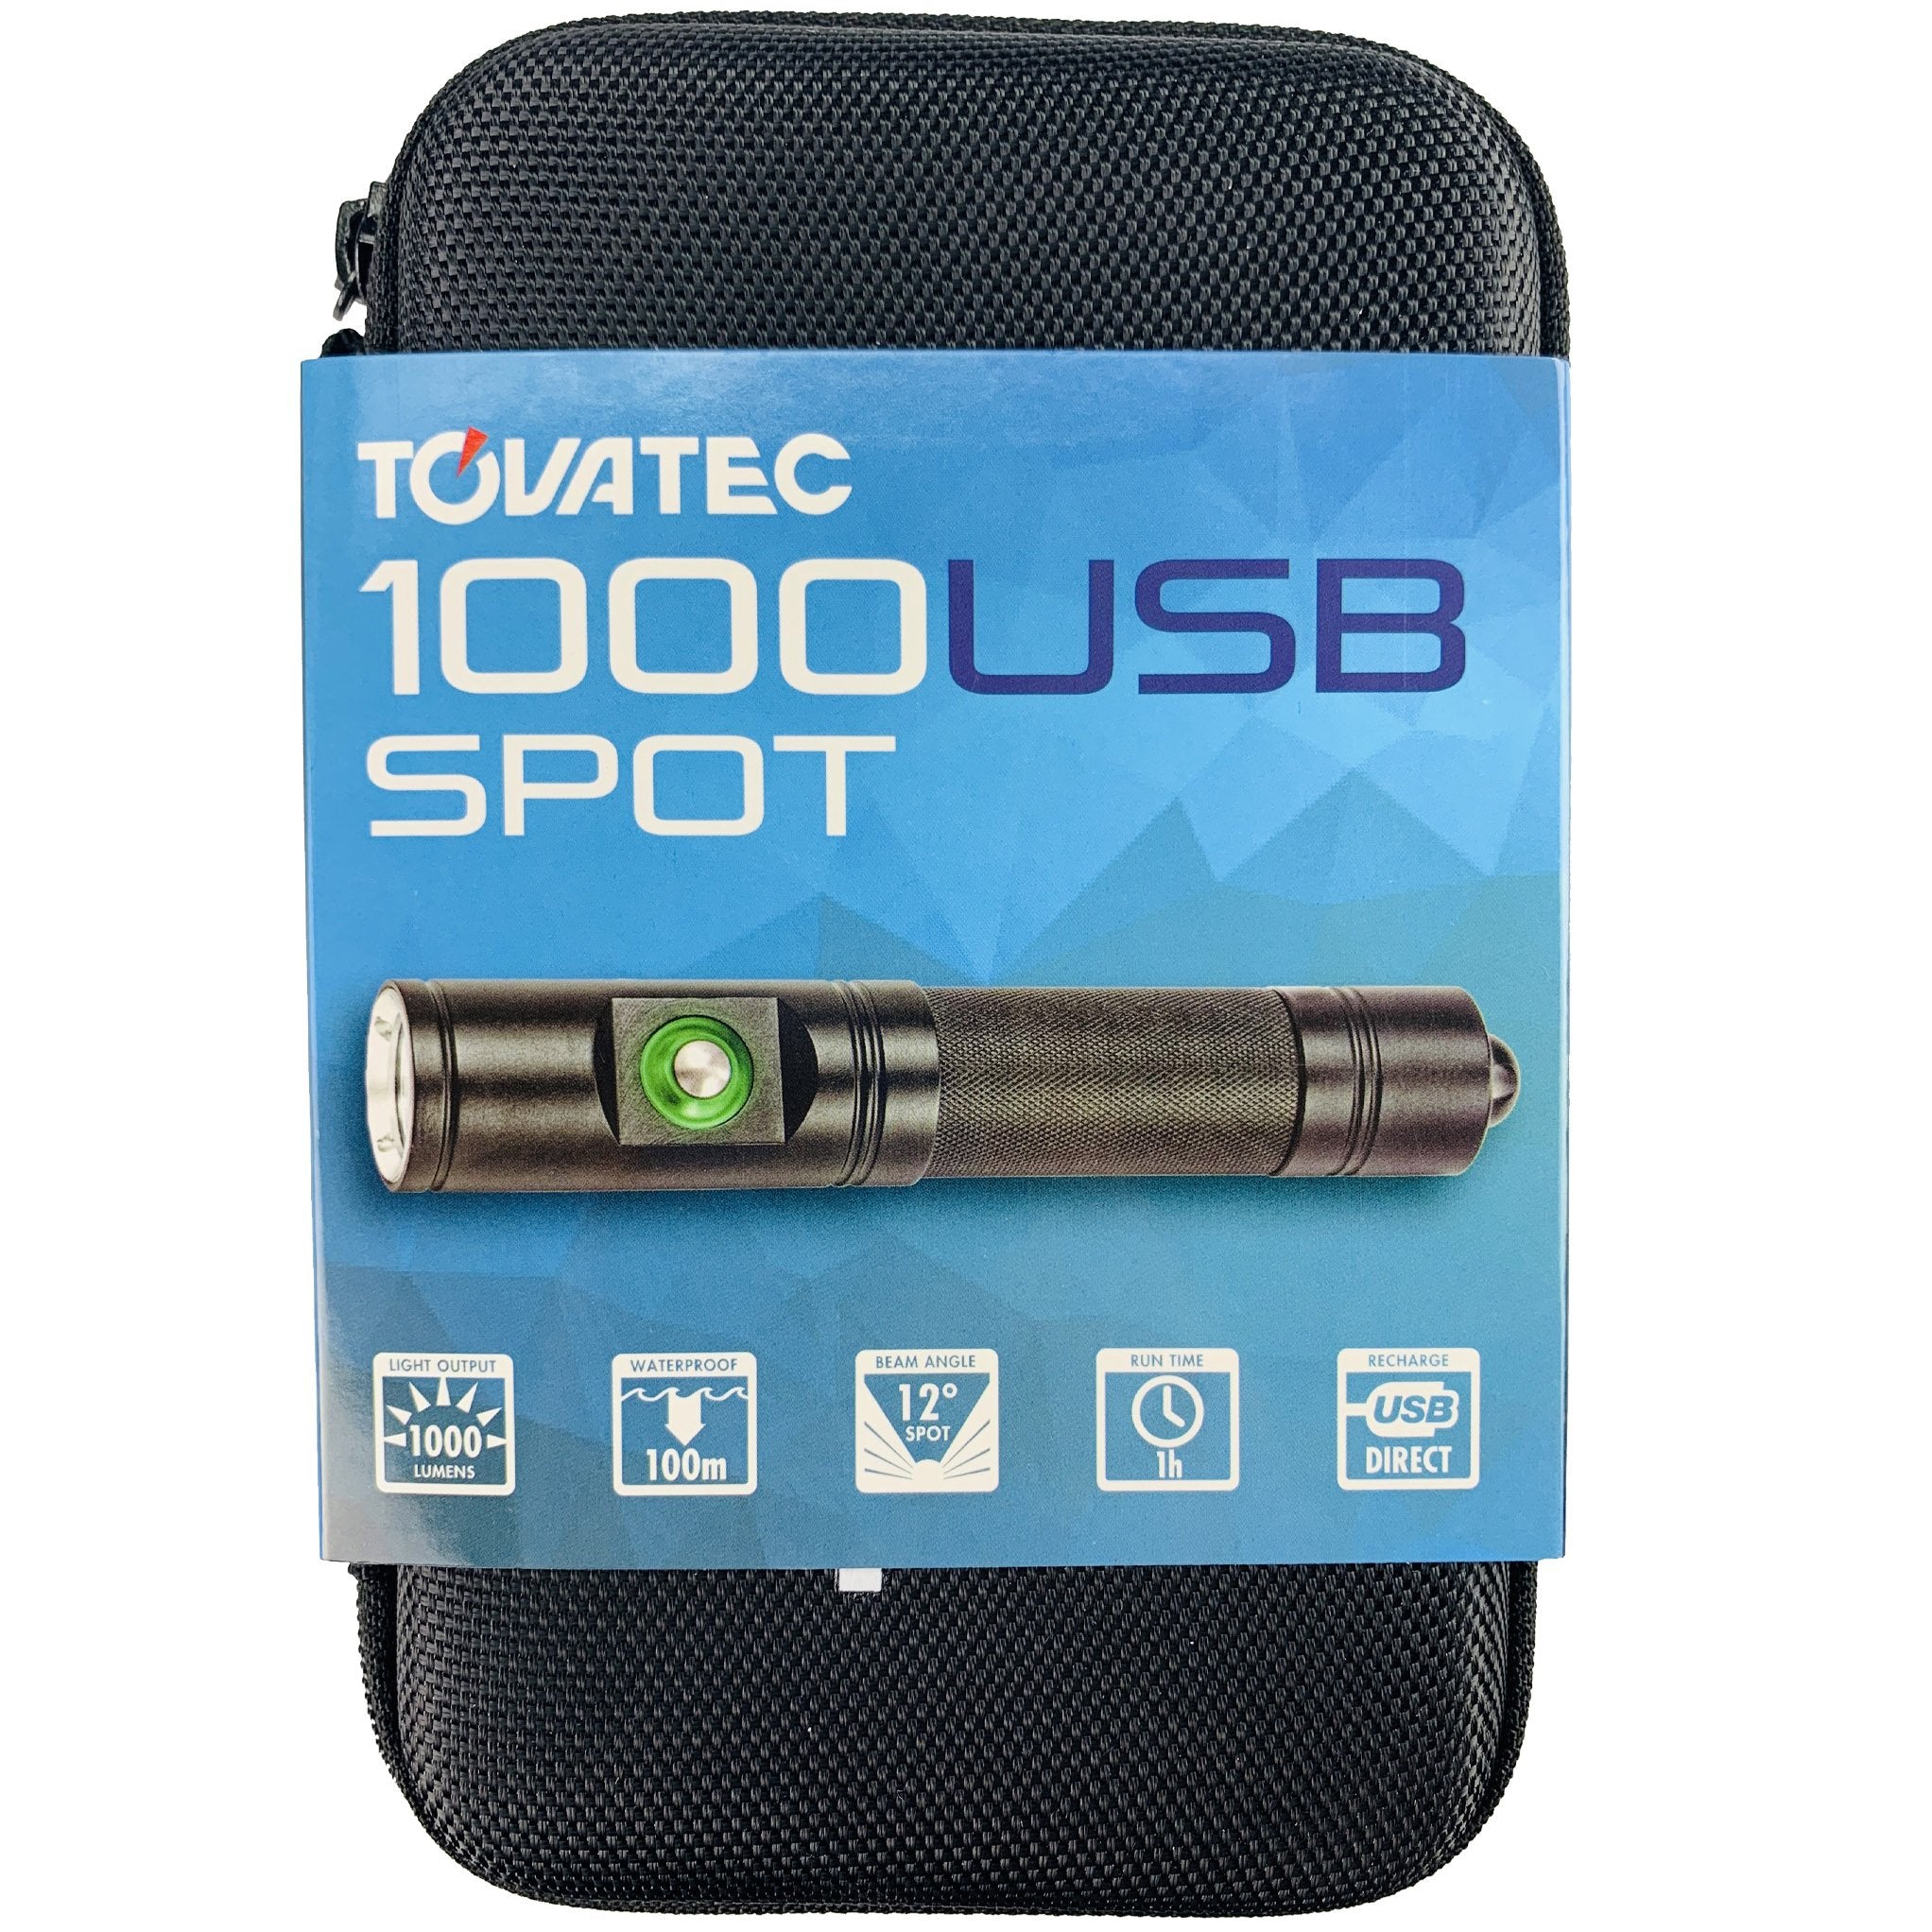 Tovatec T1000 Spot Light Dive Torch Key Features